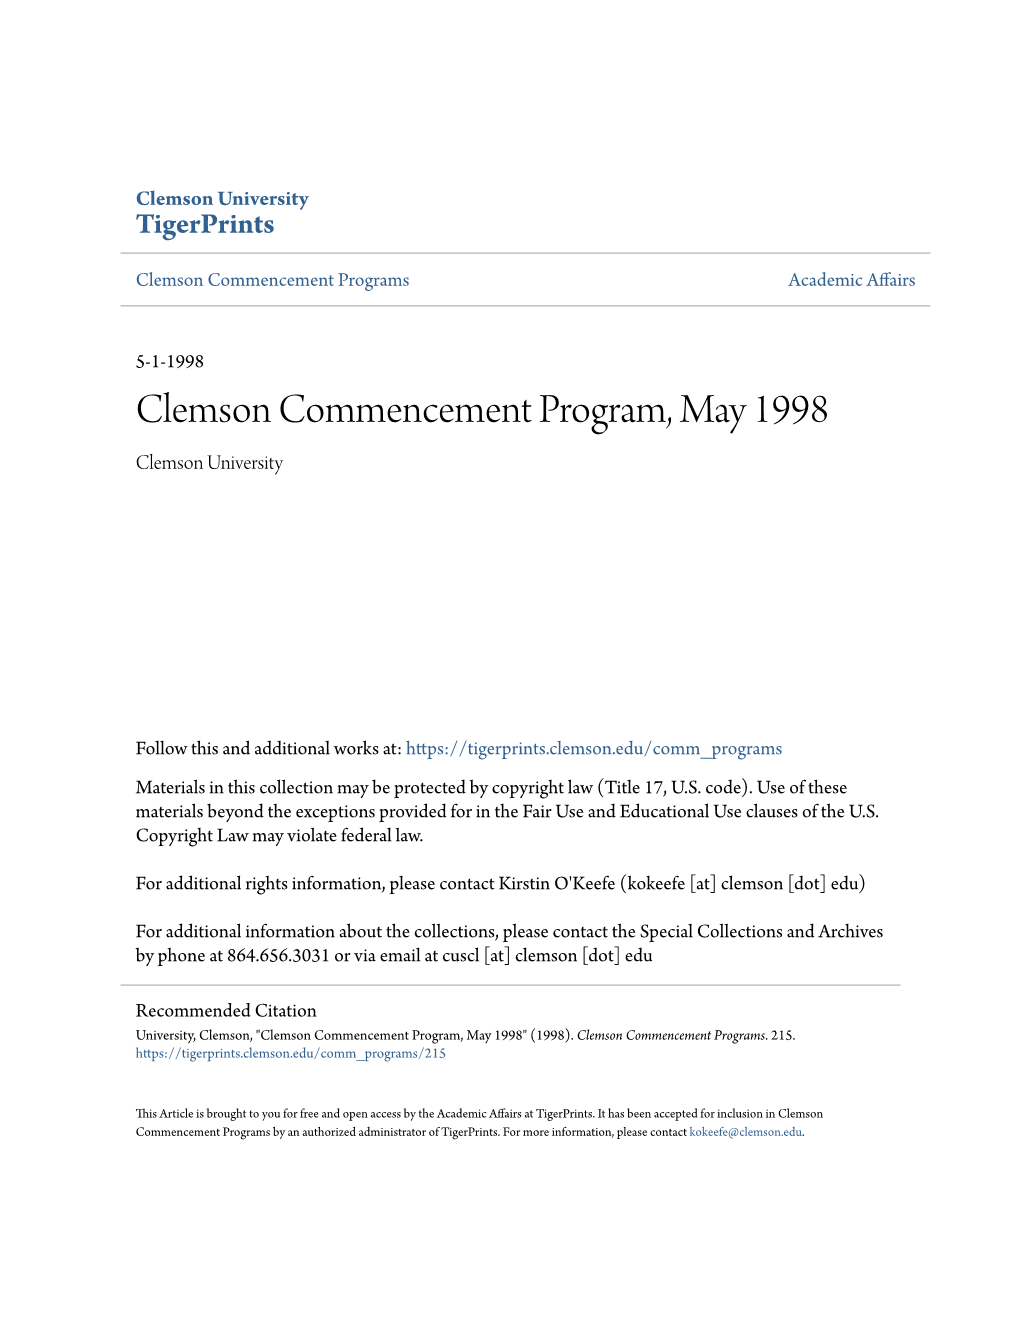 Clemson Commencement Program, May 1998 Clemson University